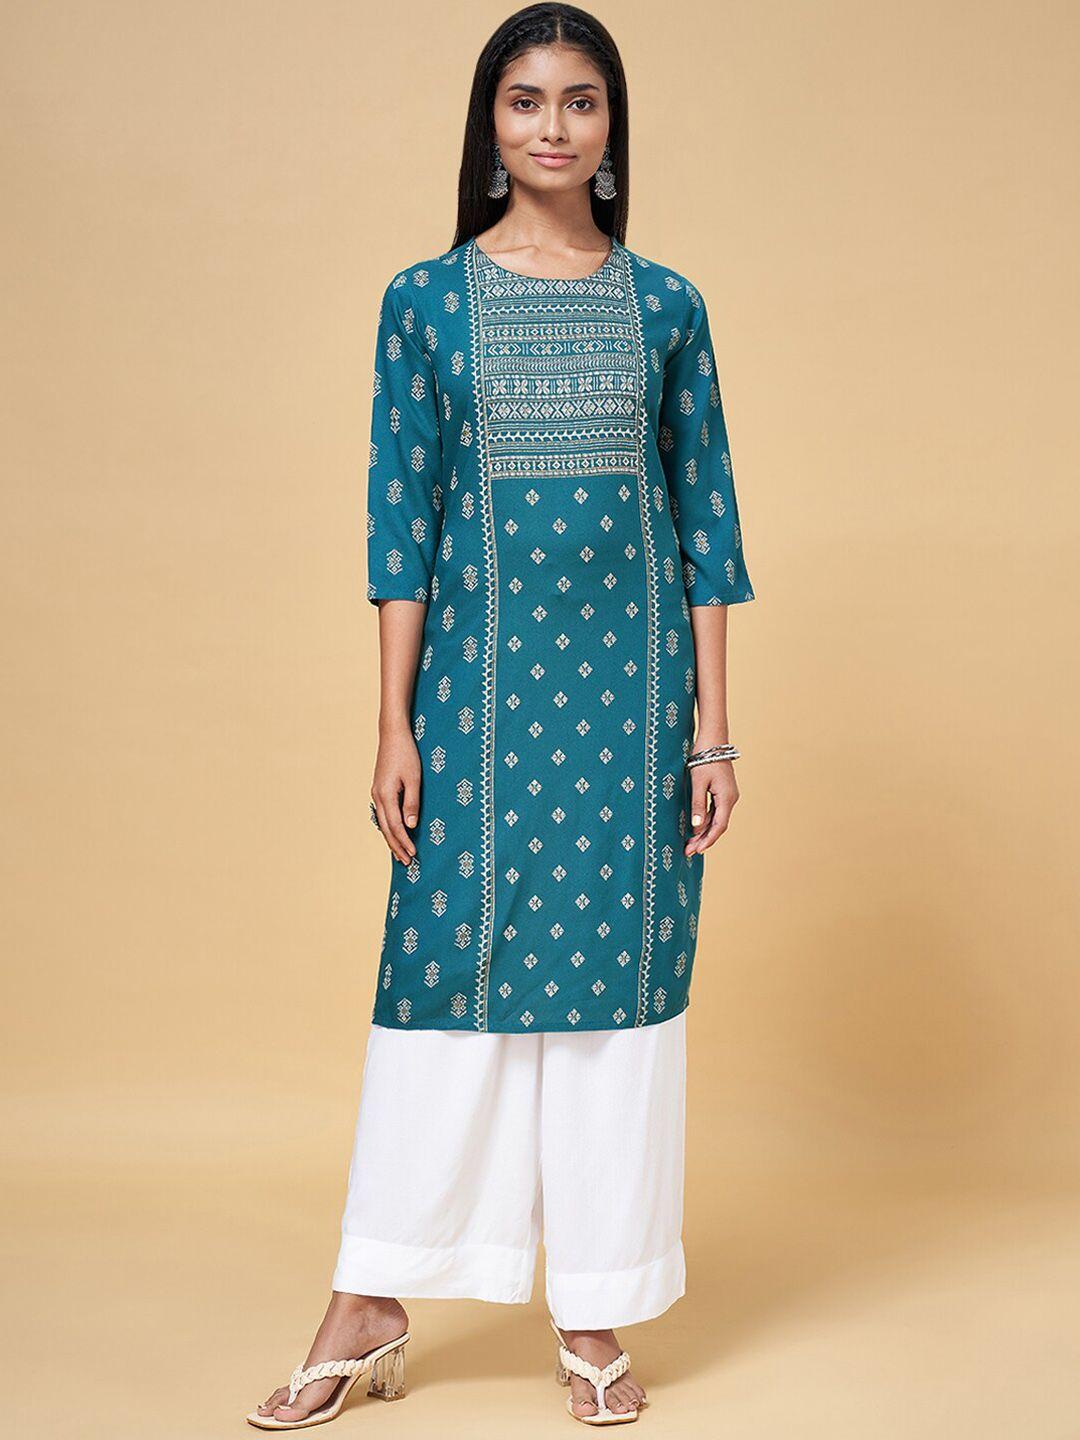 rangmanch by pantaloons women turquoise blue geometric printed flared sleeves thread work kurta